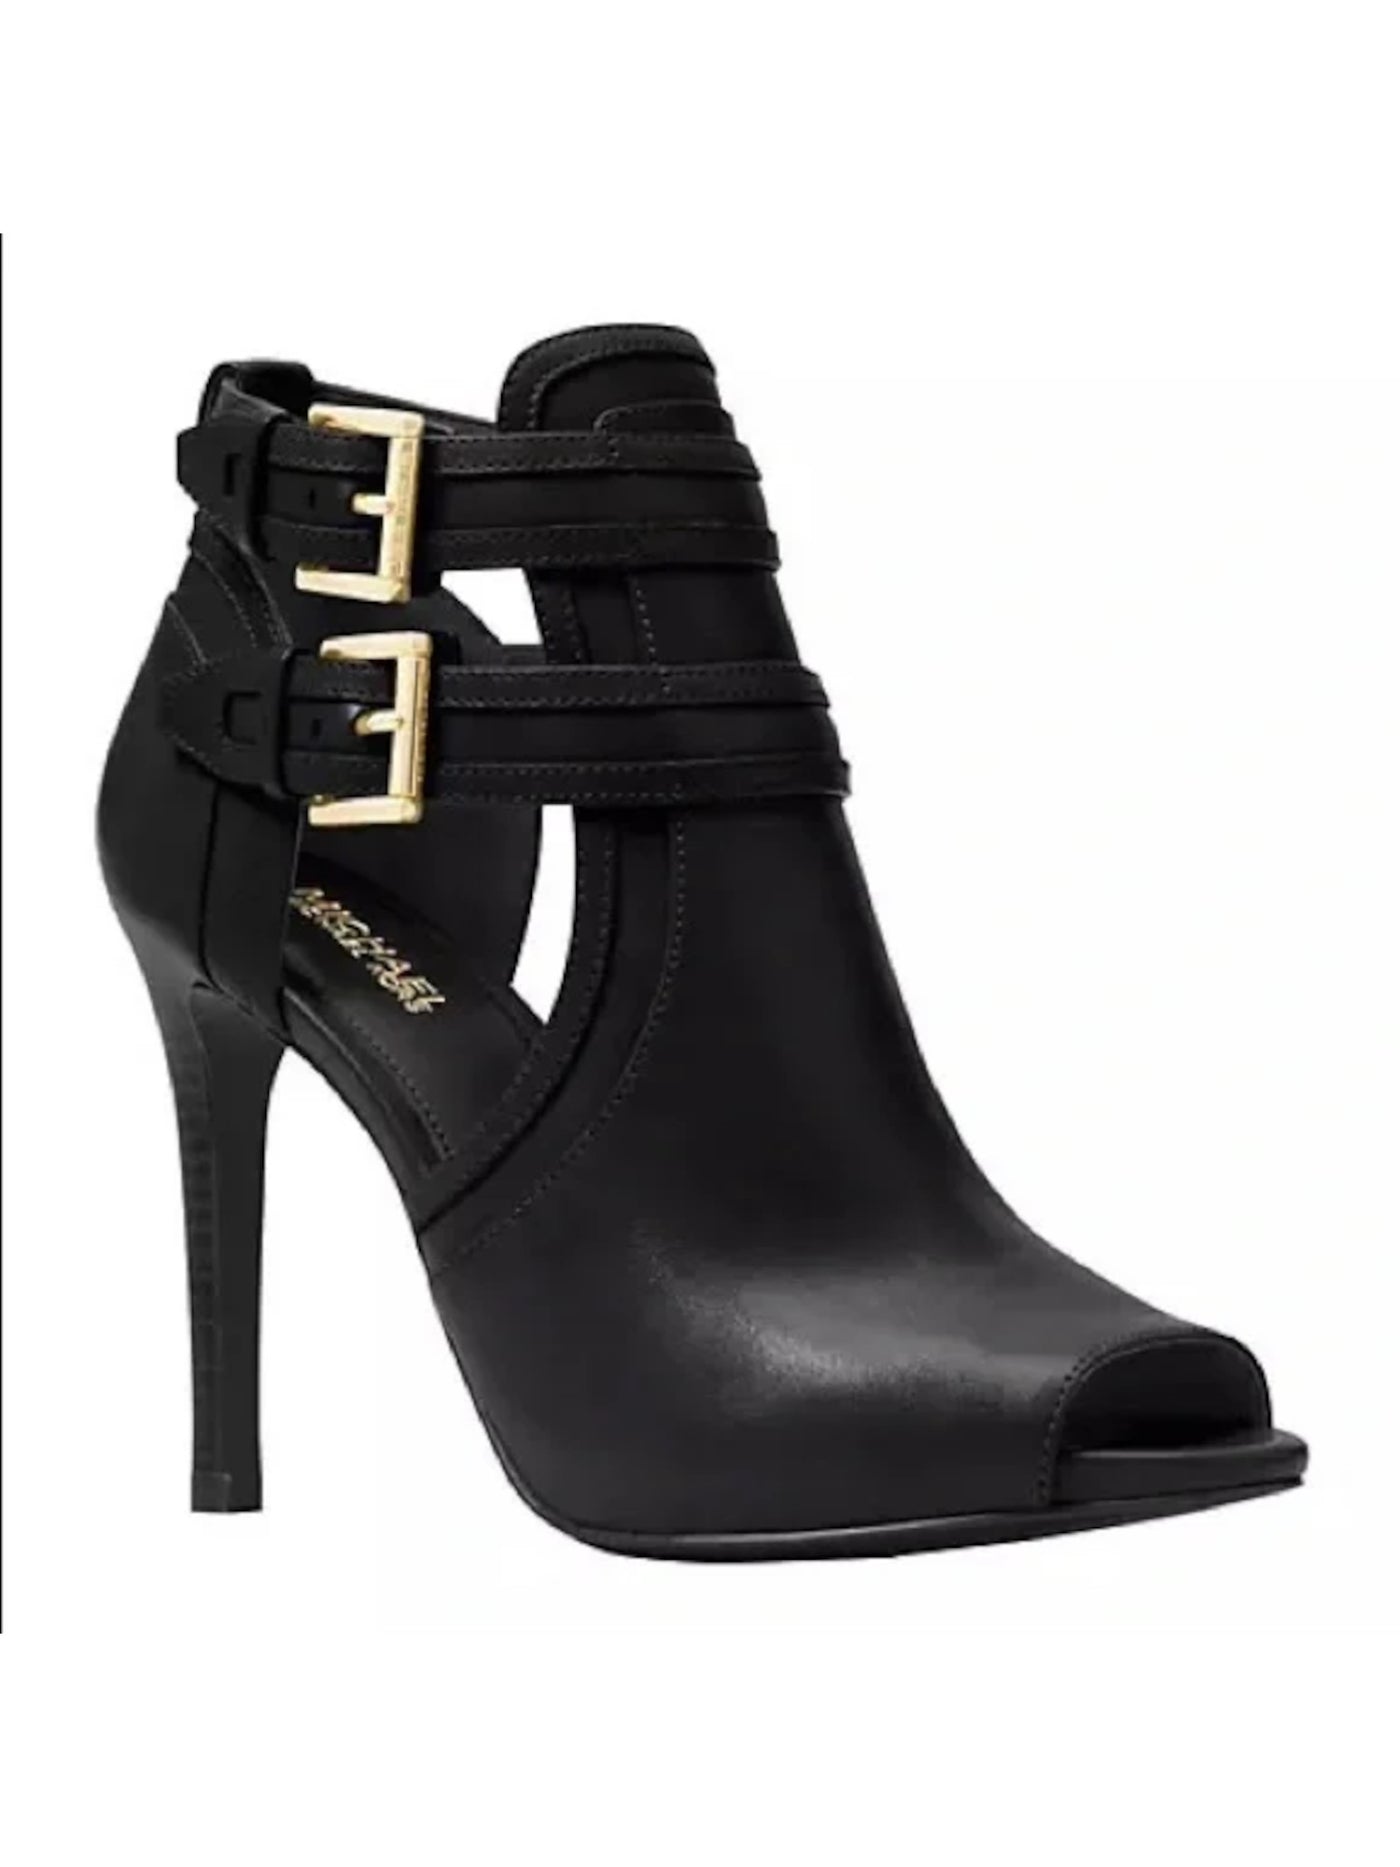 MICHAEL MICHAEL KORS Womens Black Ankle Strap Padded Blaze Peep Toe Stiletto Buckle Leather Dress Booties 8 M